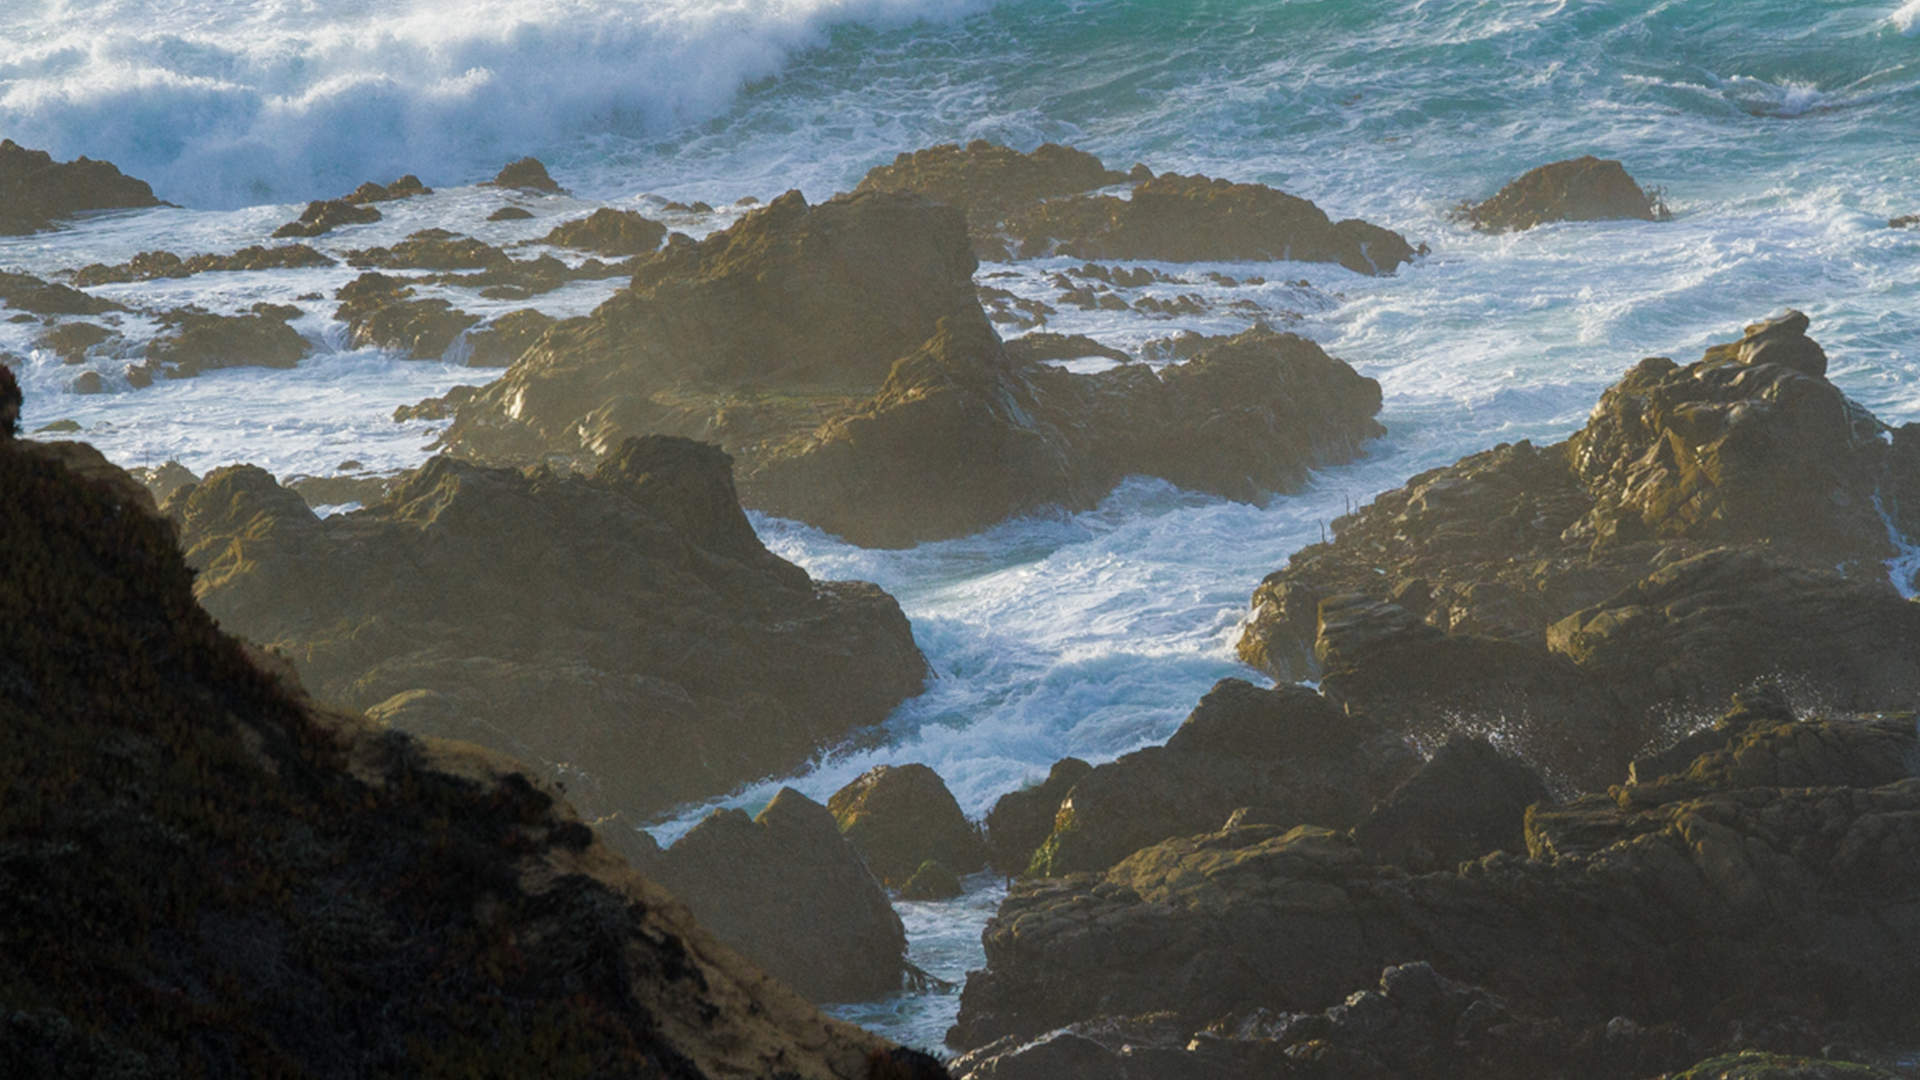 telephoto compressed rocky beach, waves crash